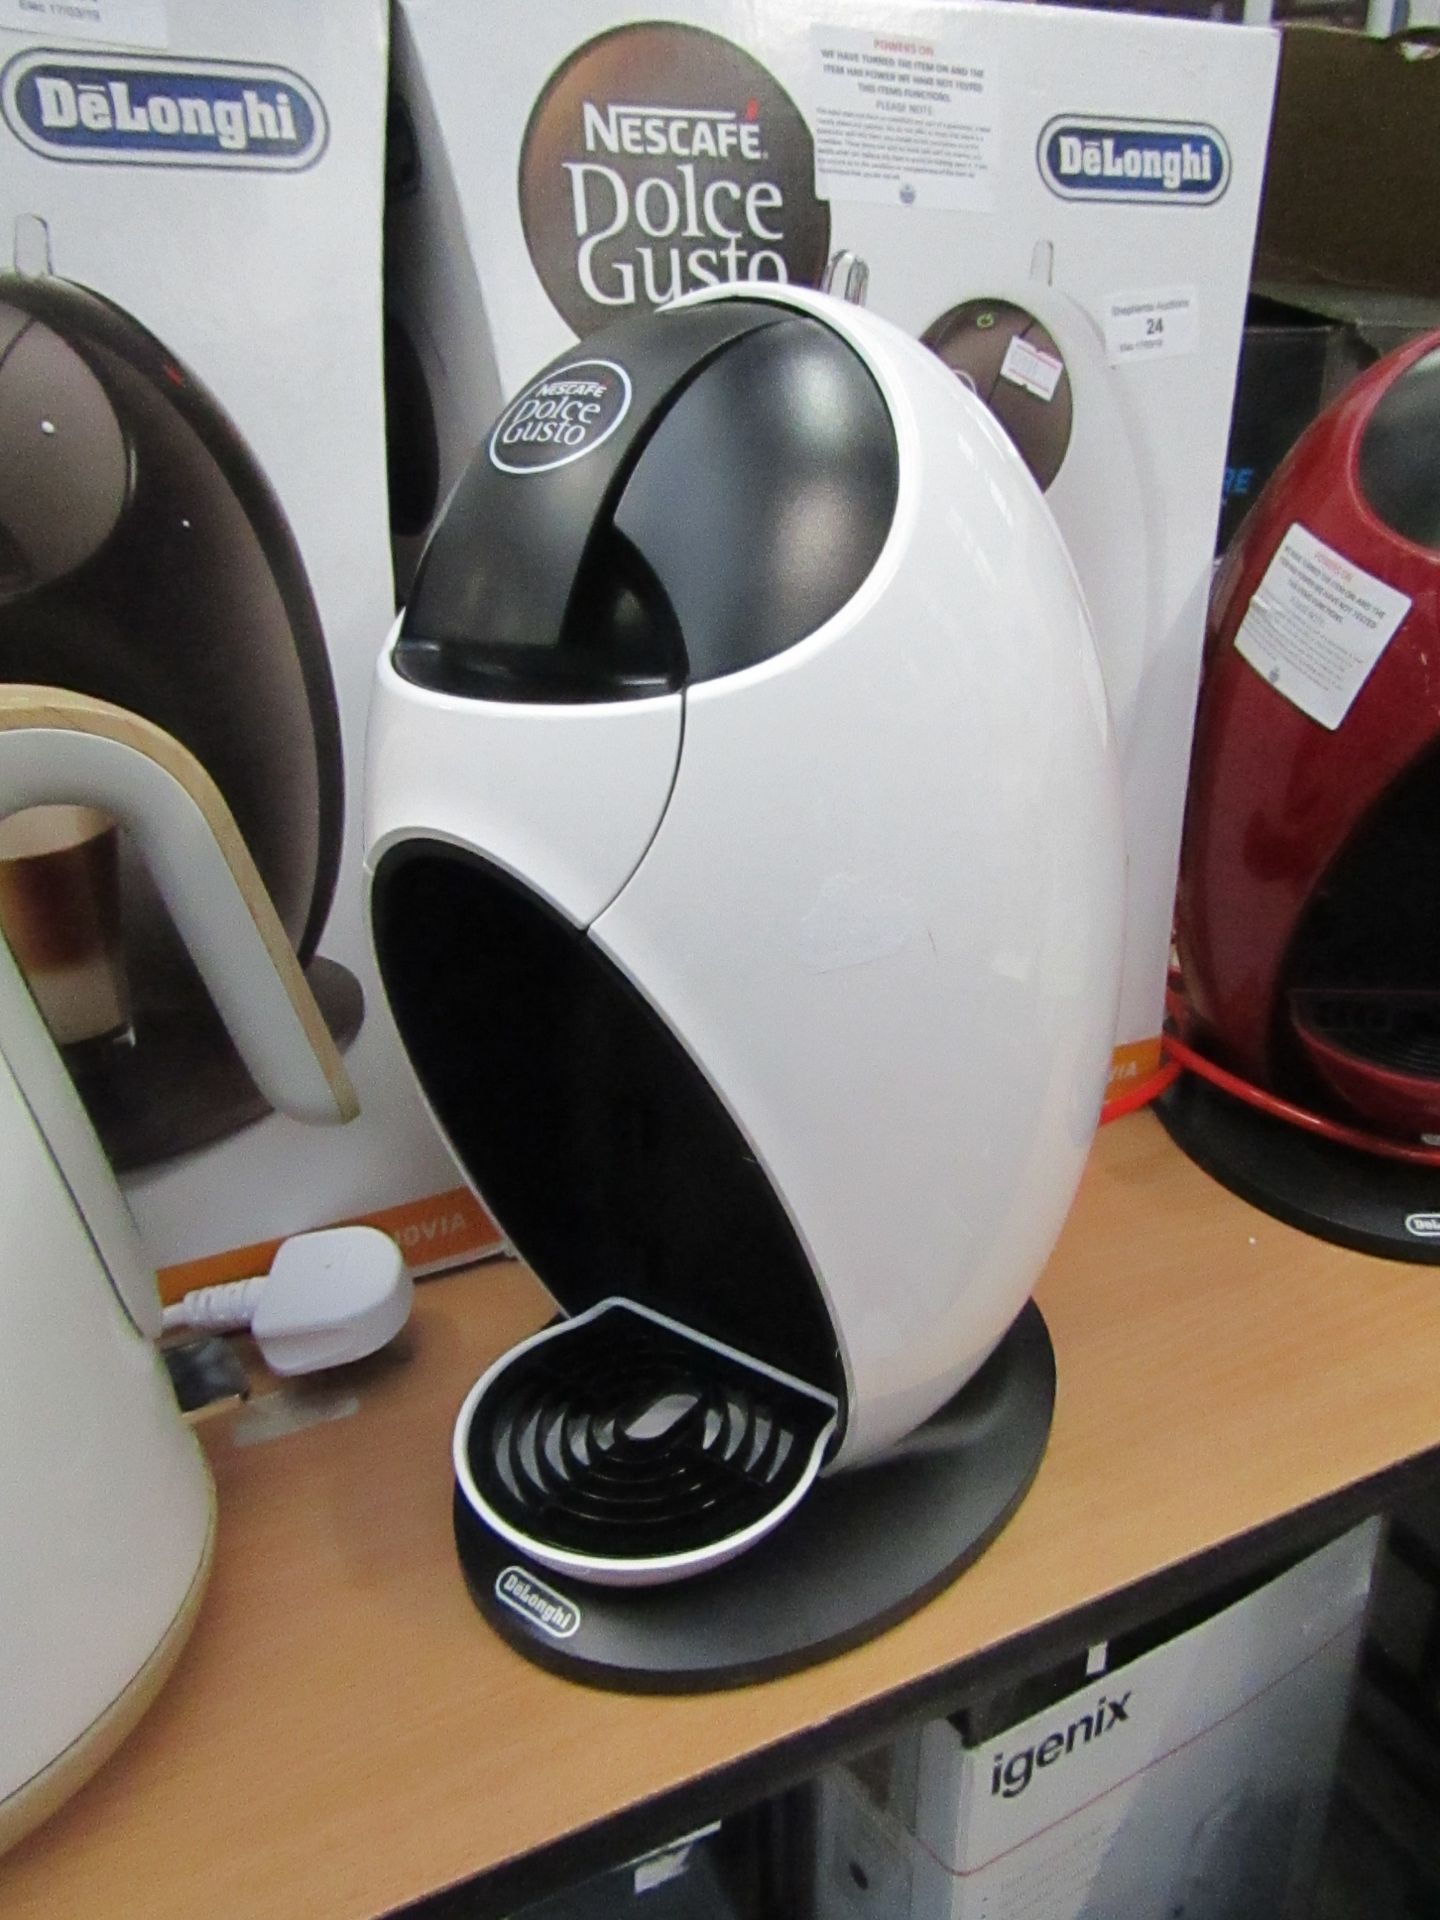 Delonghi espresso machine, powers on